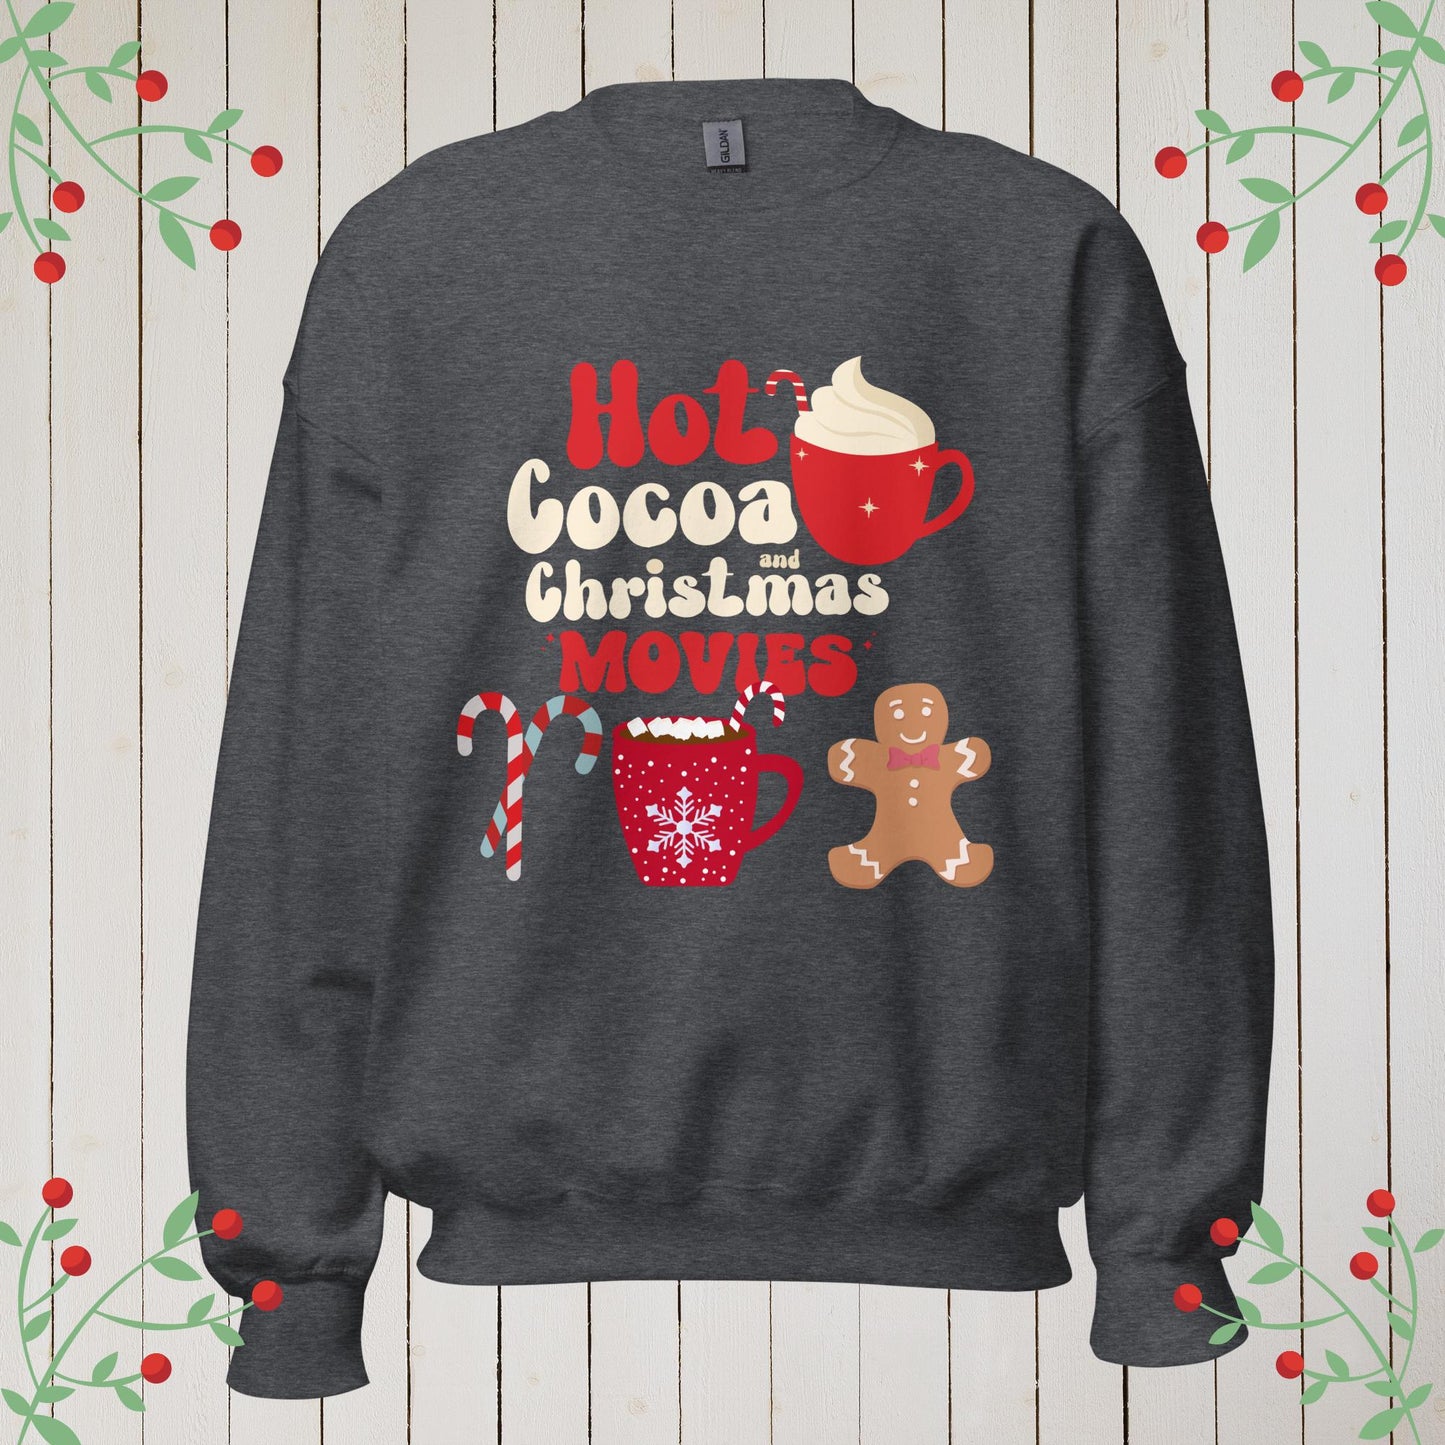 Cocoa, Christmas, Movies Sweatshirt